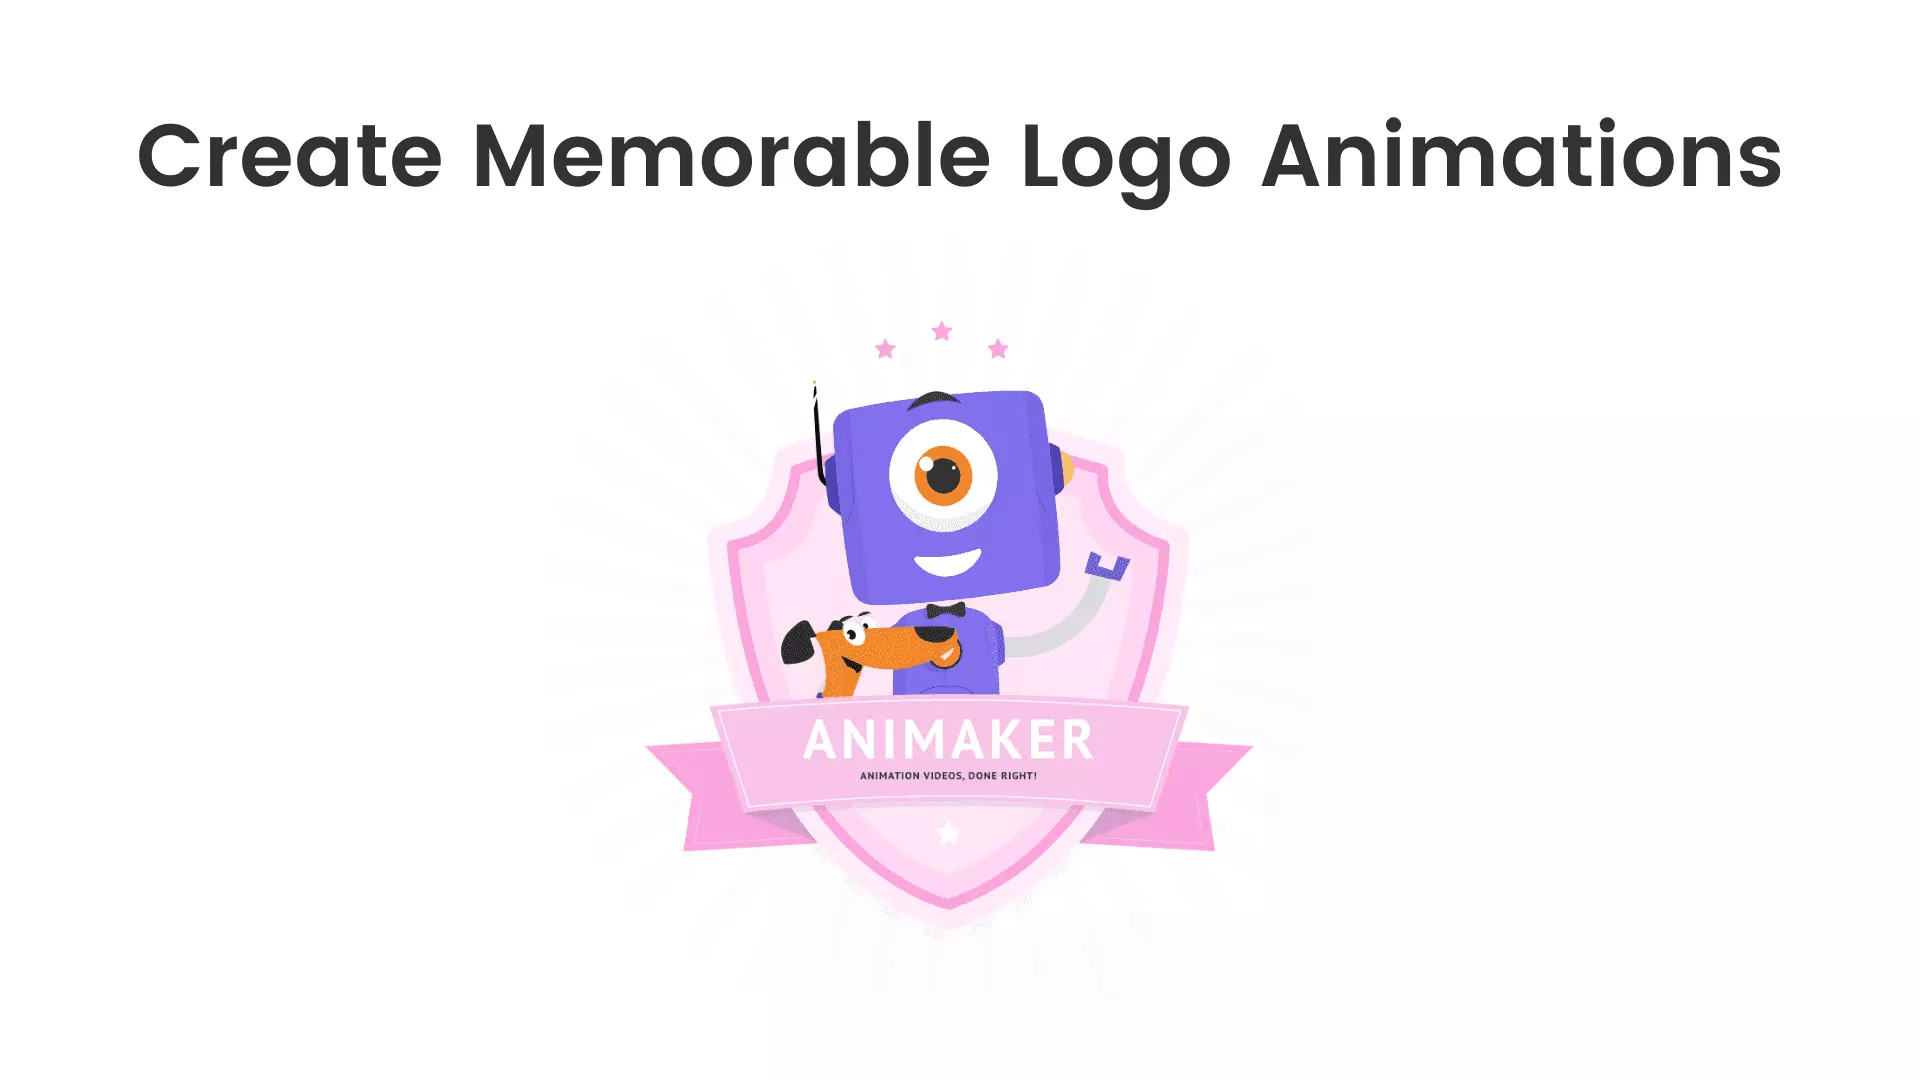 How To Create A Live Animated Logo